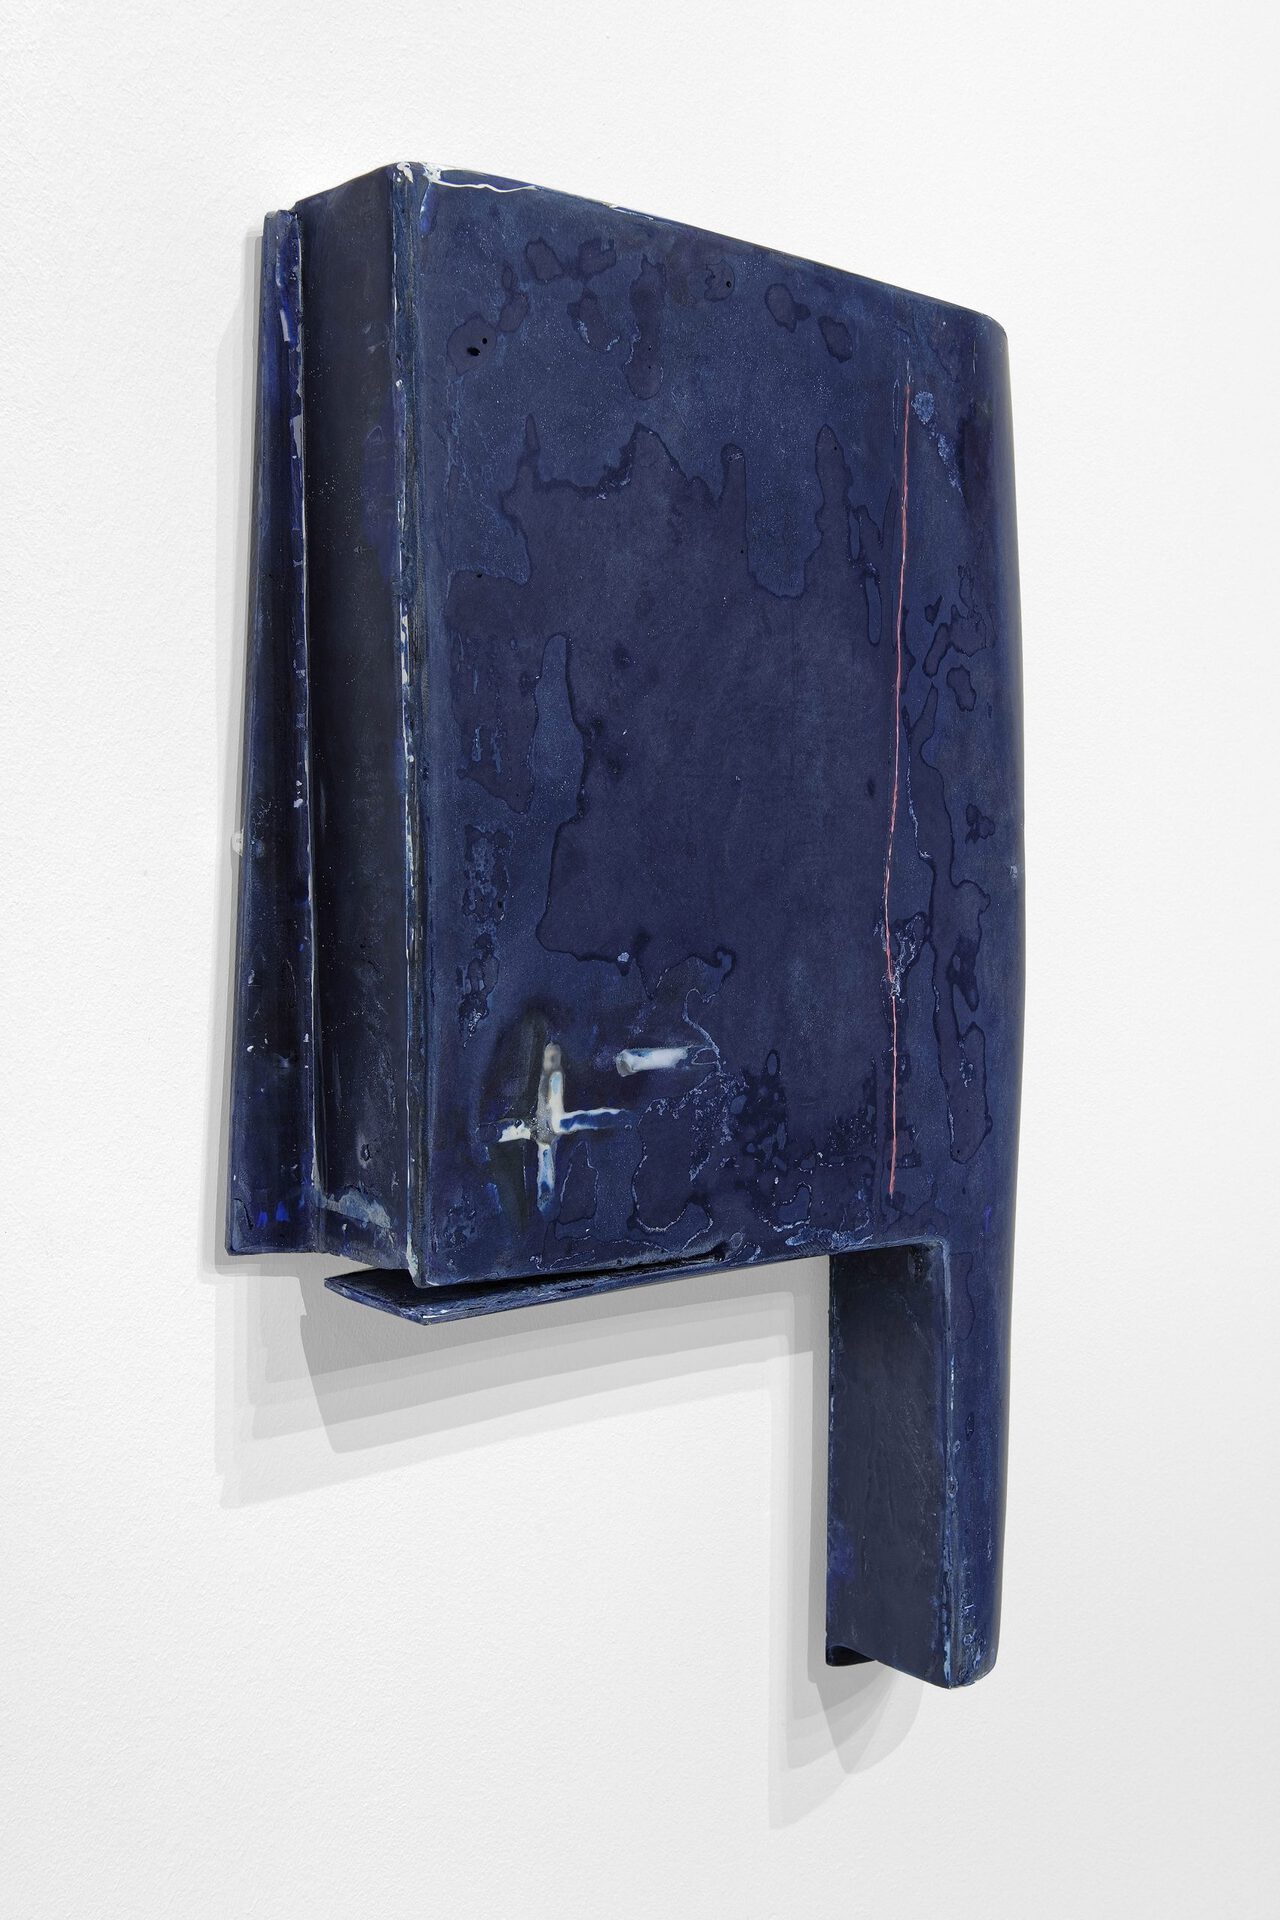 Margot Pietri, nightfall,  2020, fiberglass, epoxy resin, pigments, gouache, 40 x 55 x 10 cm